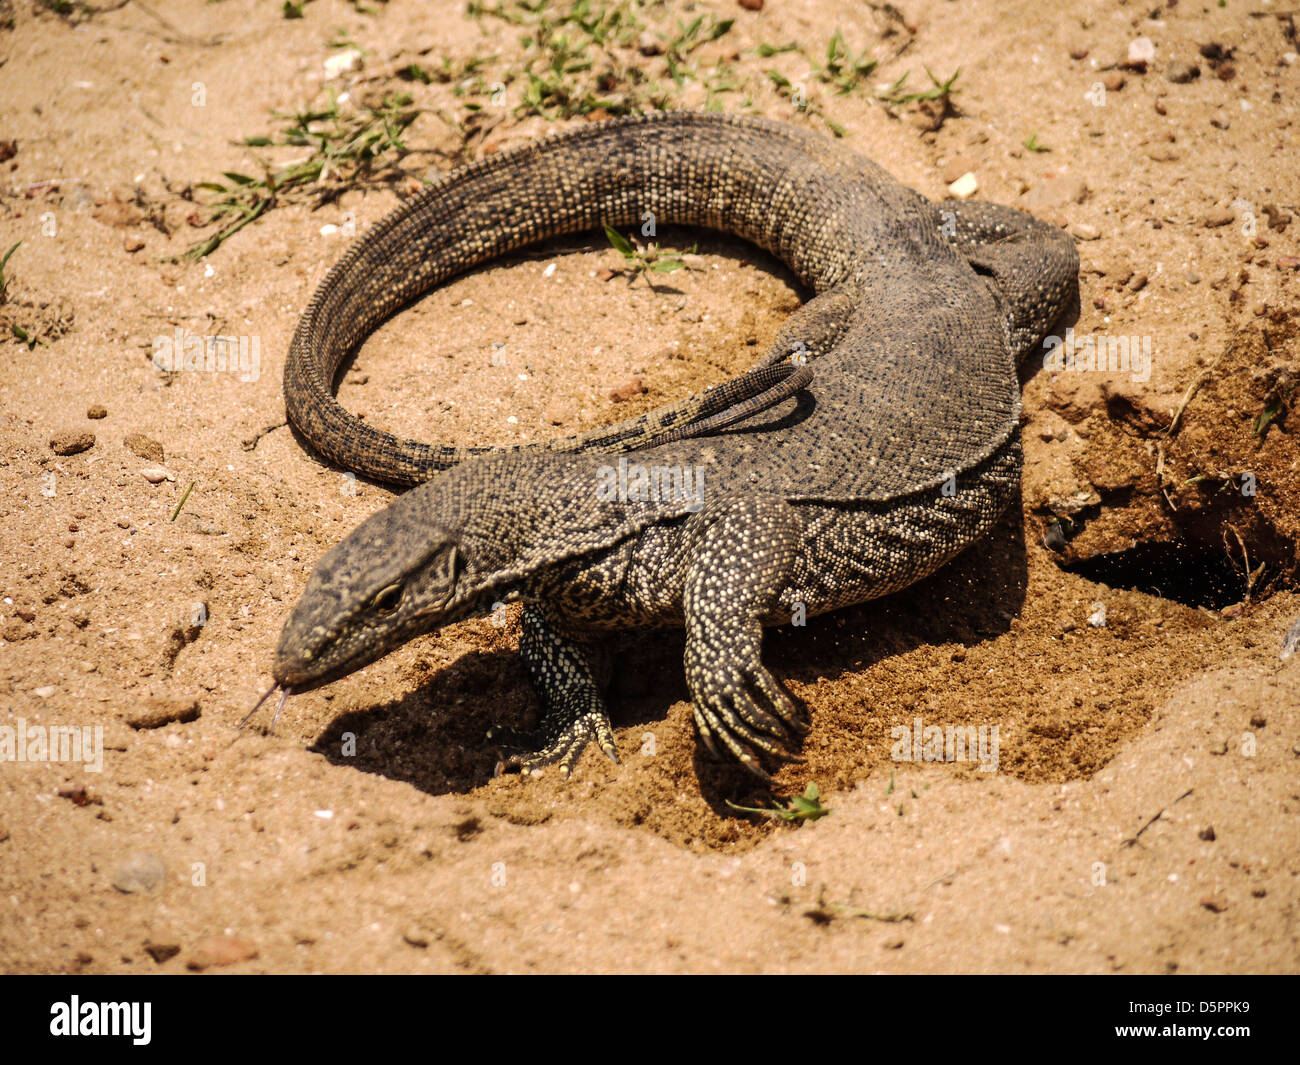 A Varanus salvator water monitor lizard (we think!) found on Sri Lanka Ahungalla beach Stock Photo